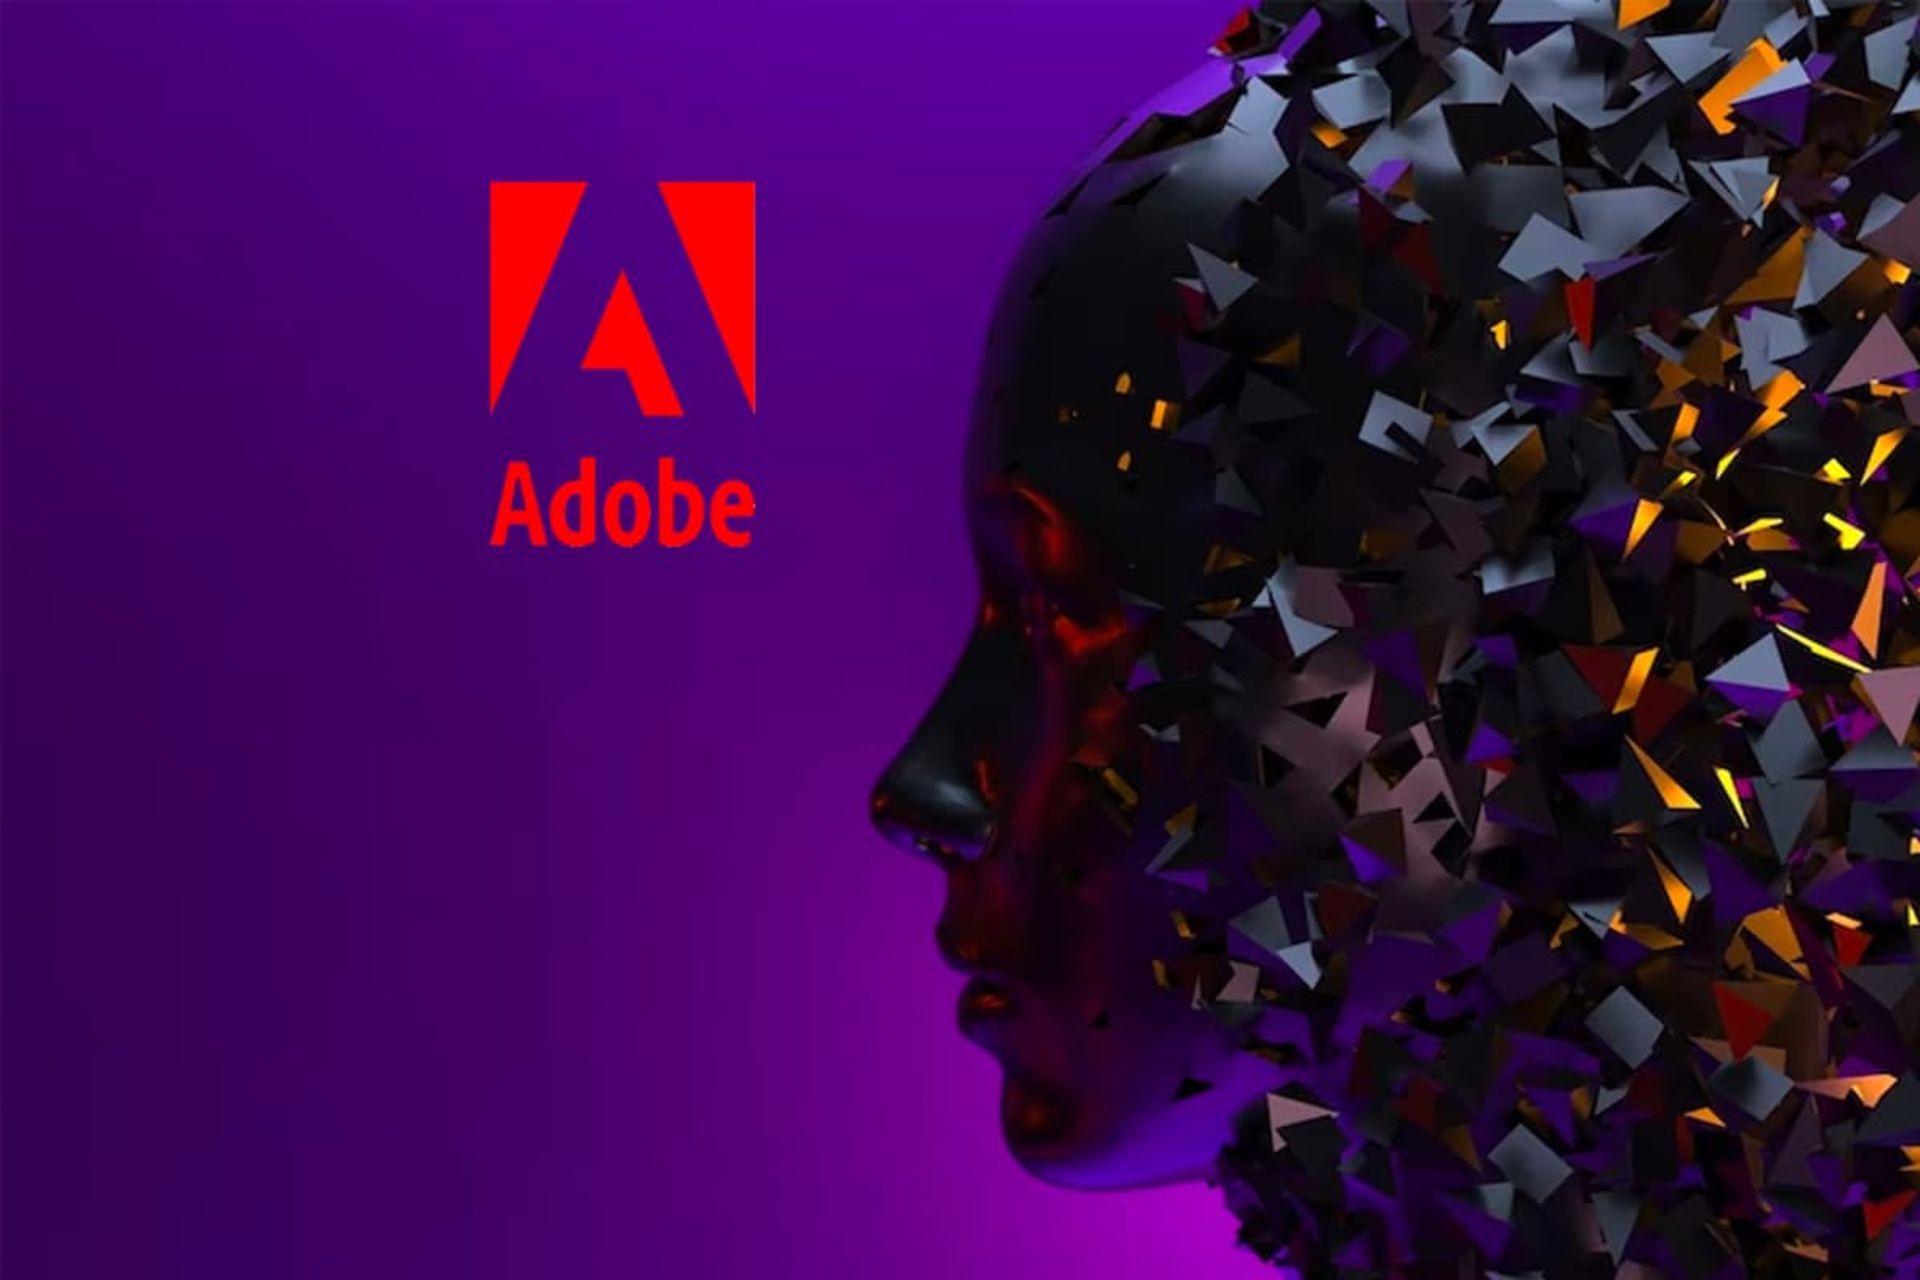 هوش مصنوعی مشکی نیم رخ لوگو ادوبی Adobe